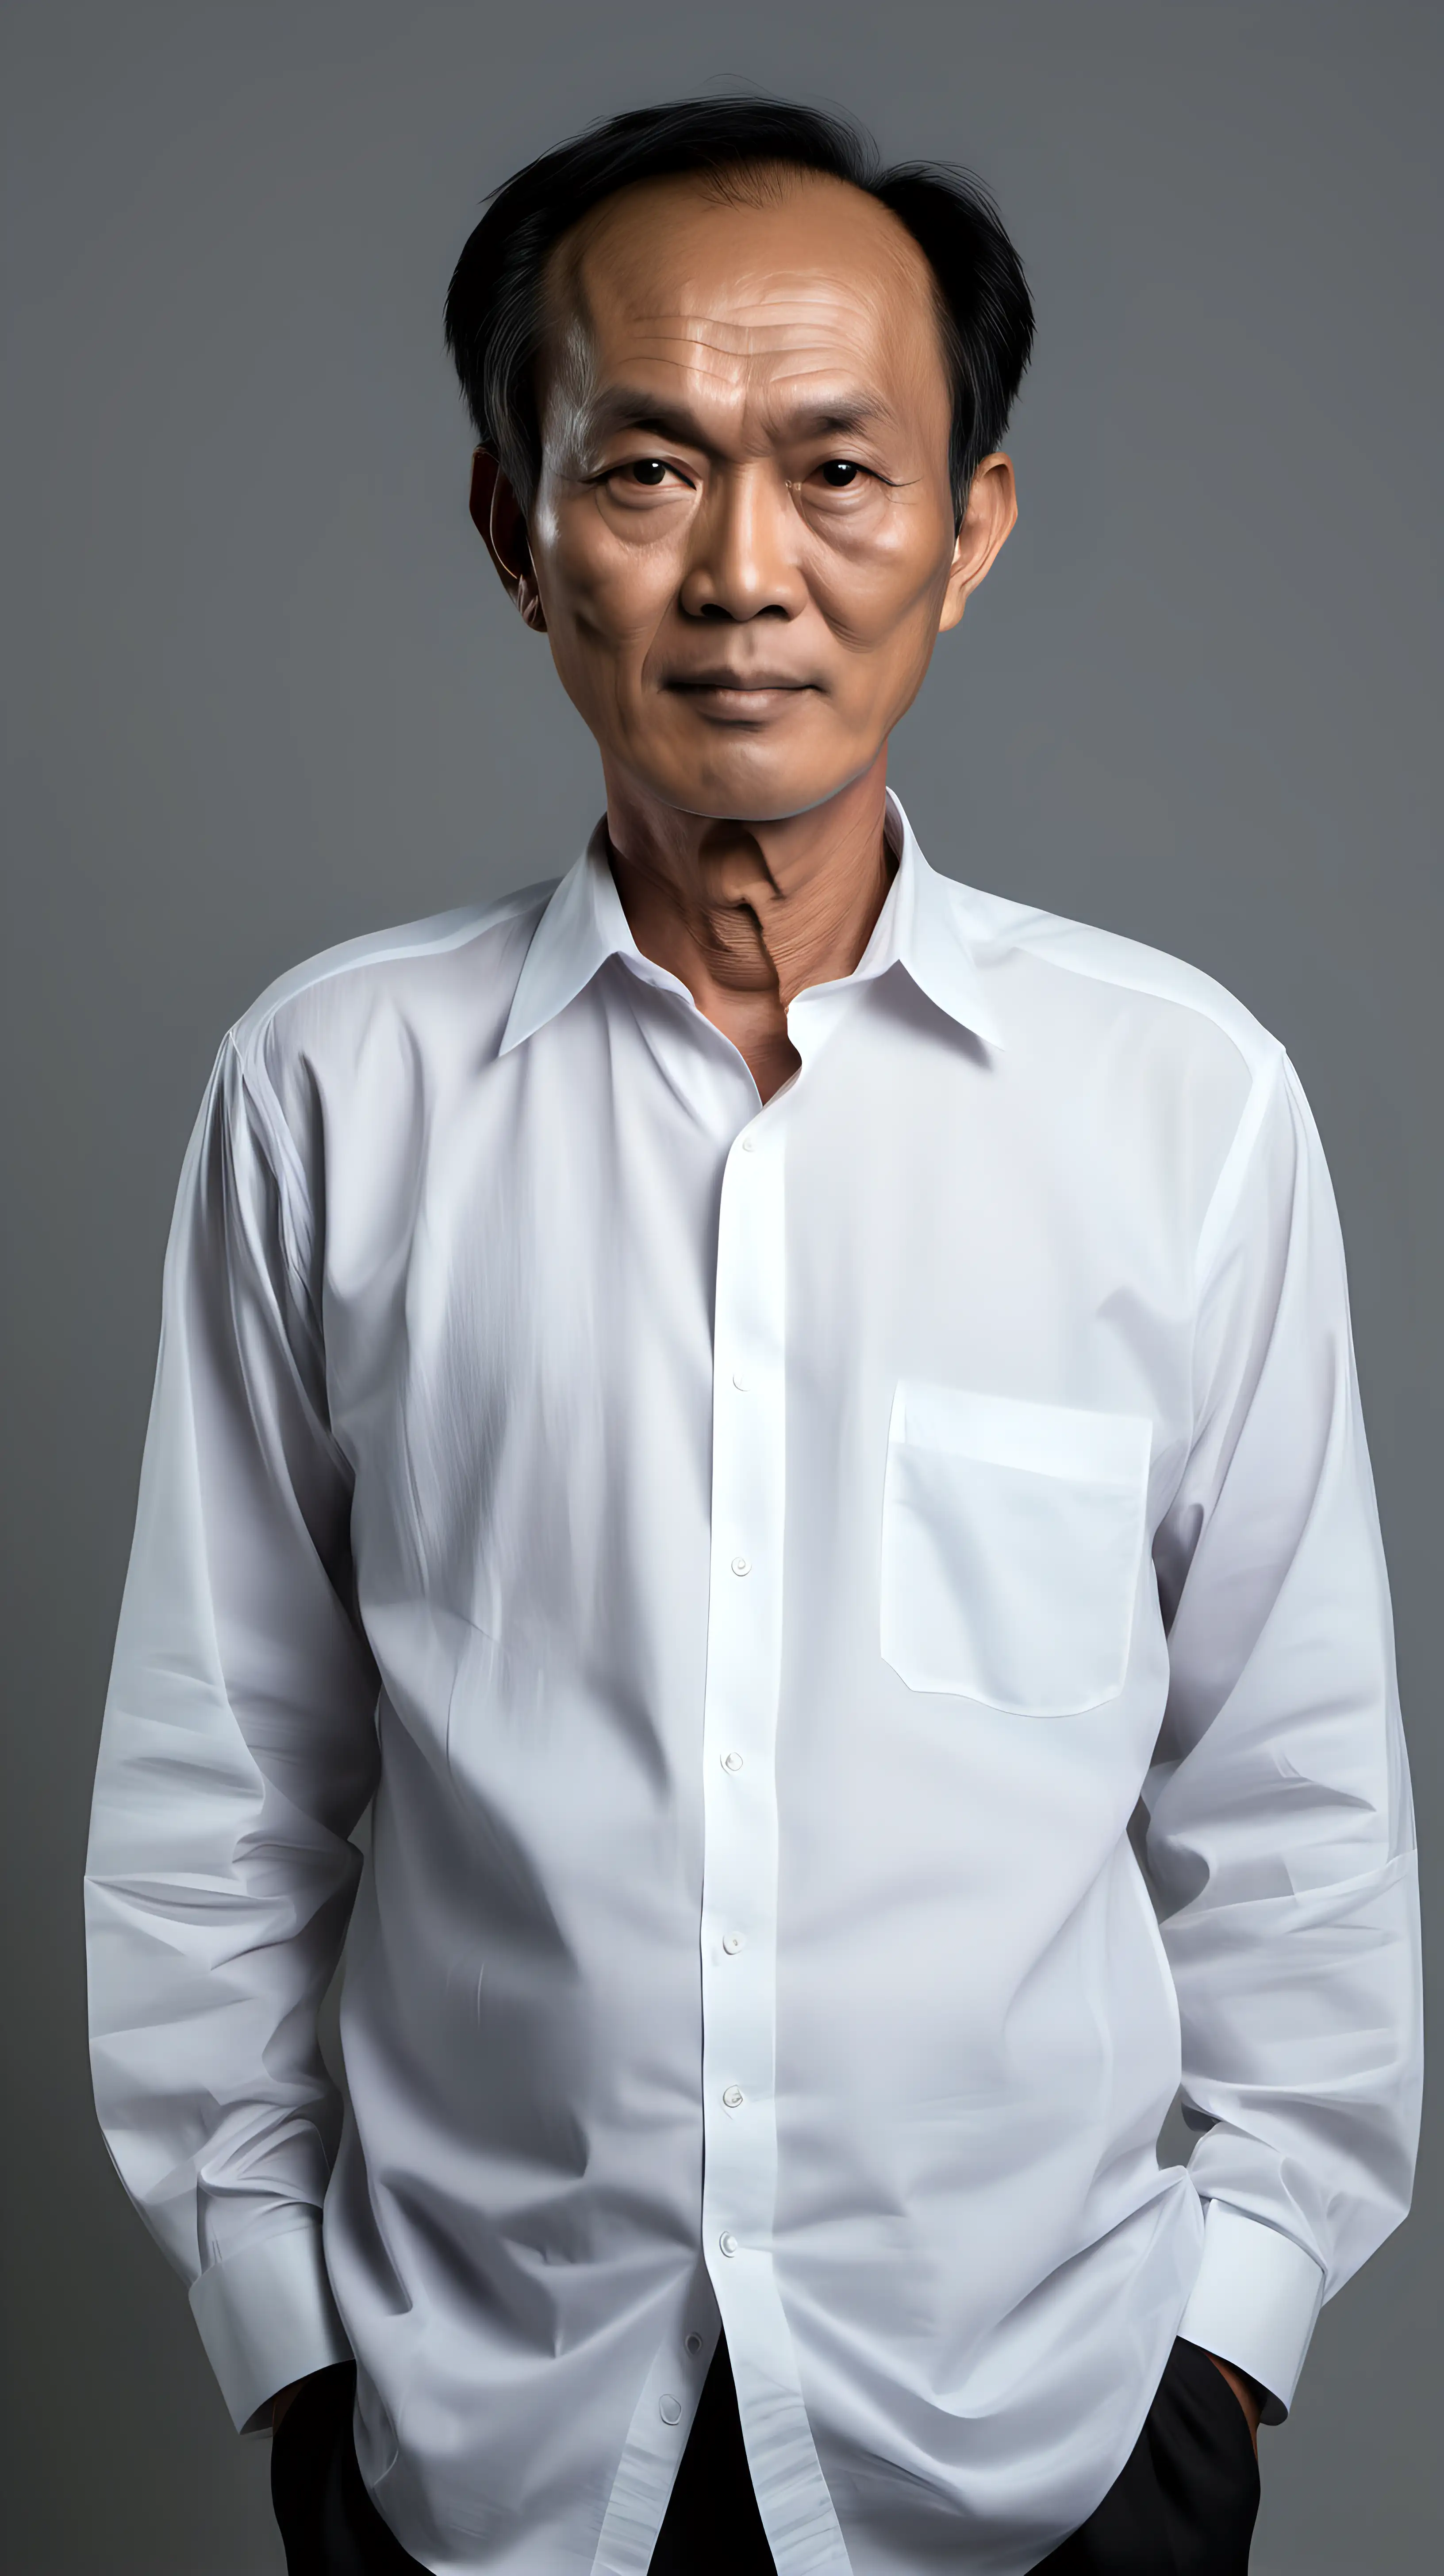 Elegant Southeast Asian Man in White Shirt